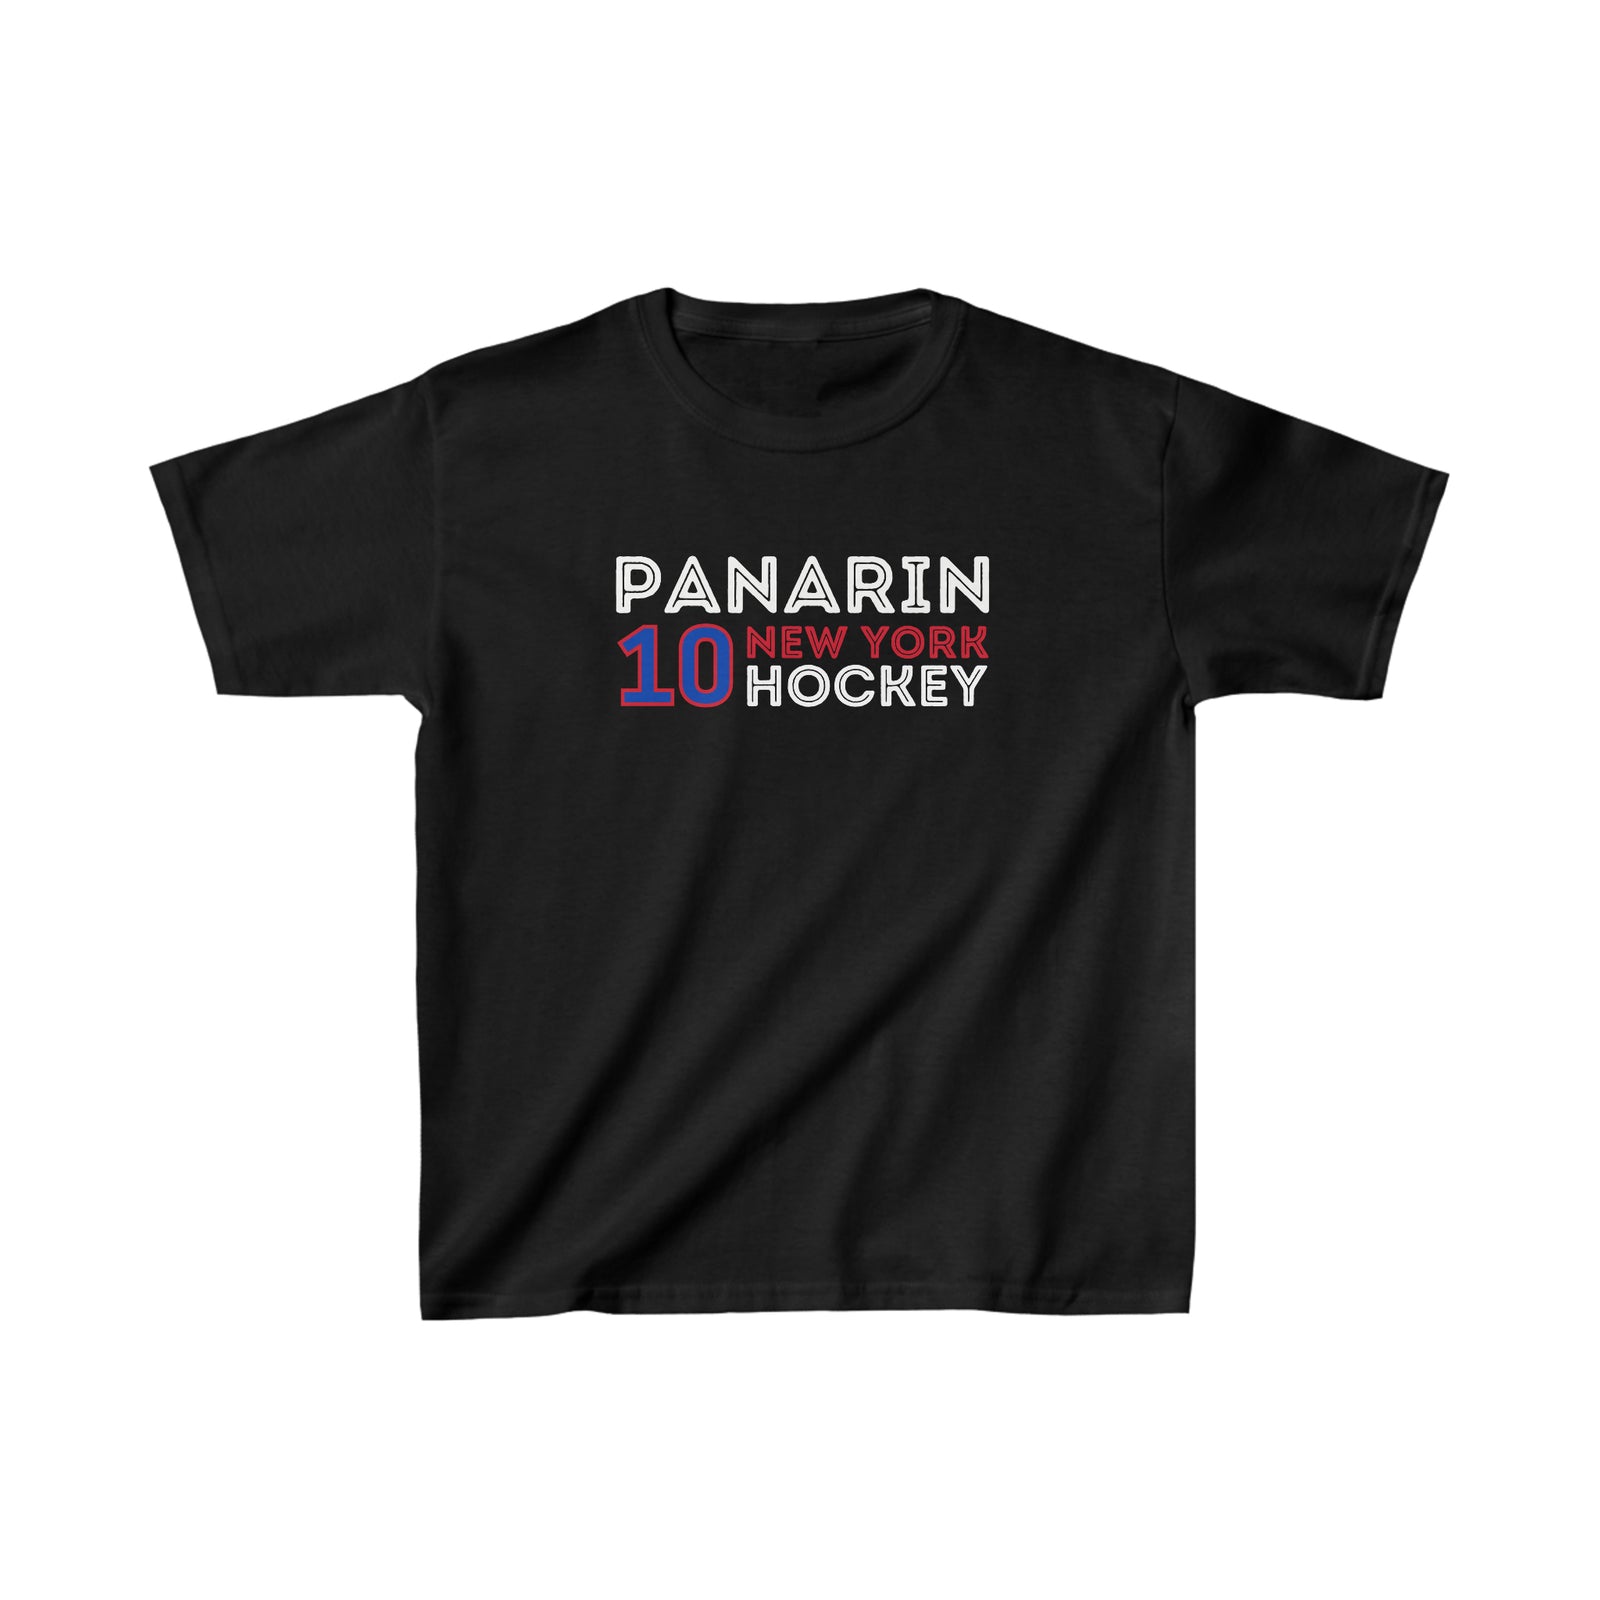 Artemi Panarin T-shirt, The Breadman T-shirt - Camatee